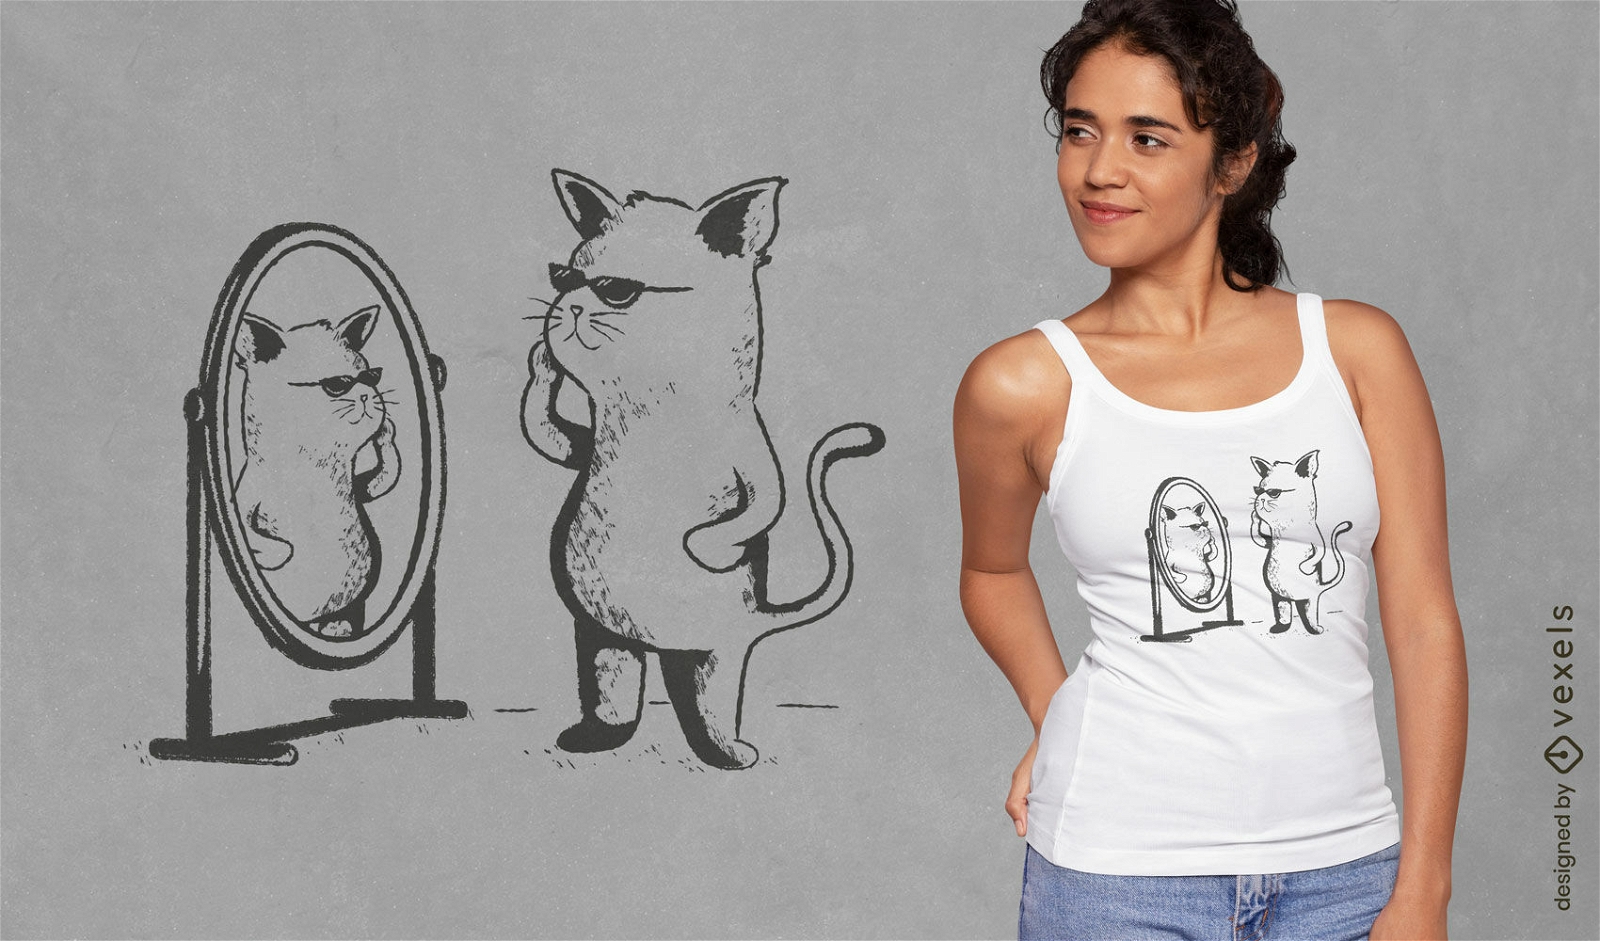 Freches Katzen-T-Shirt-Design